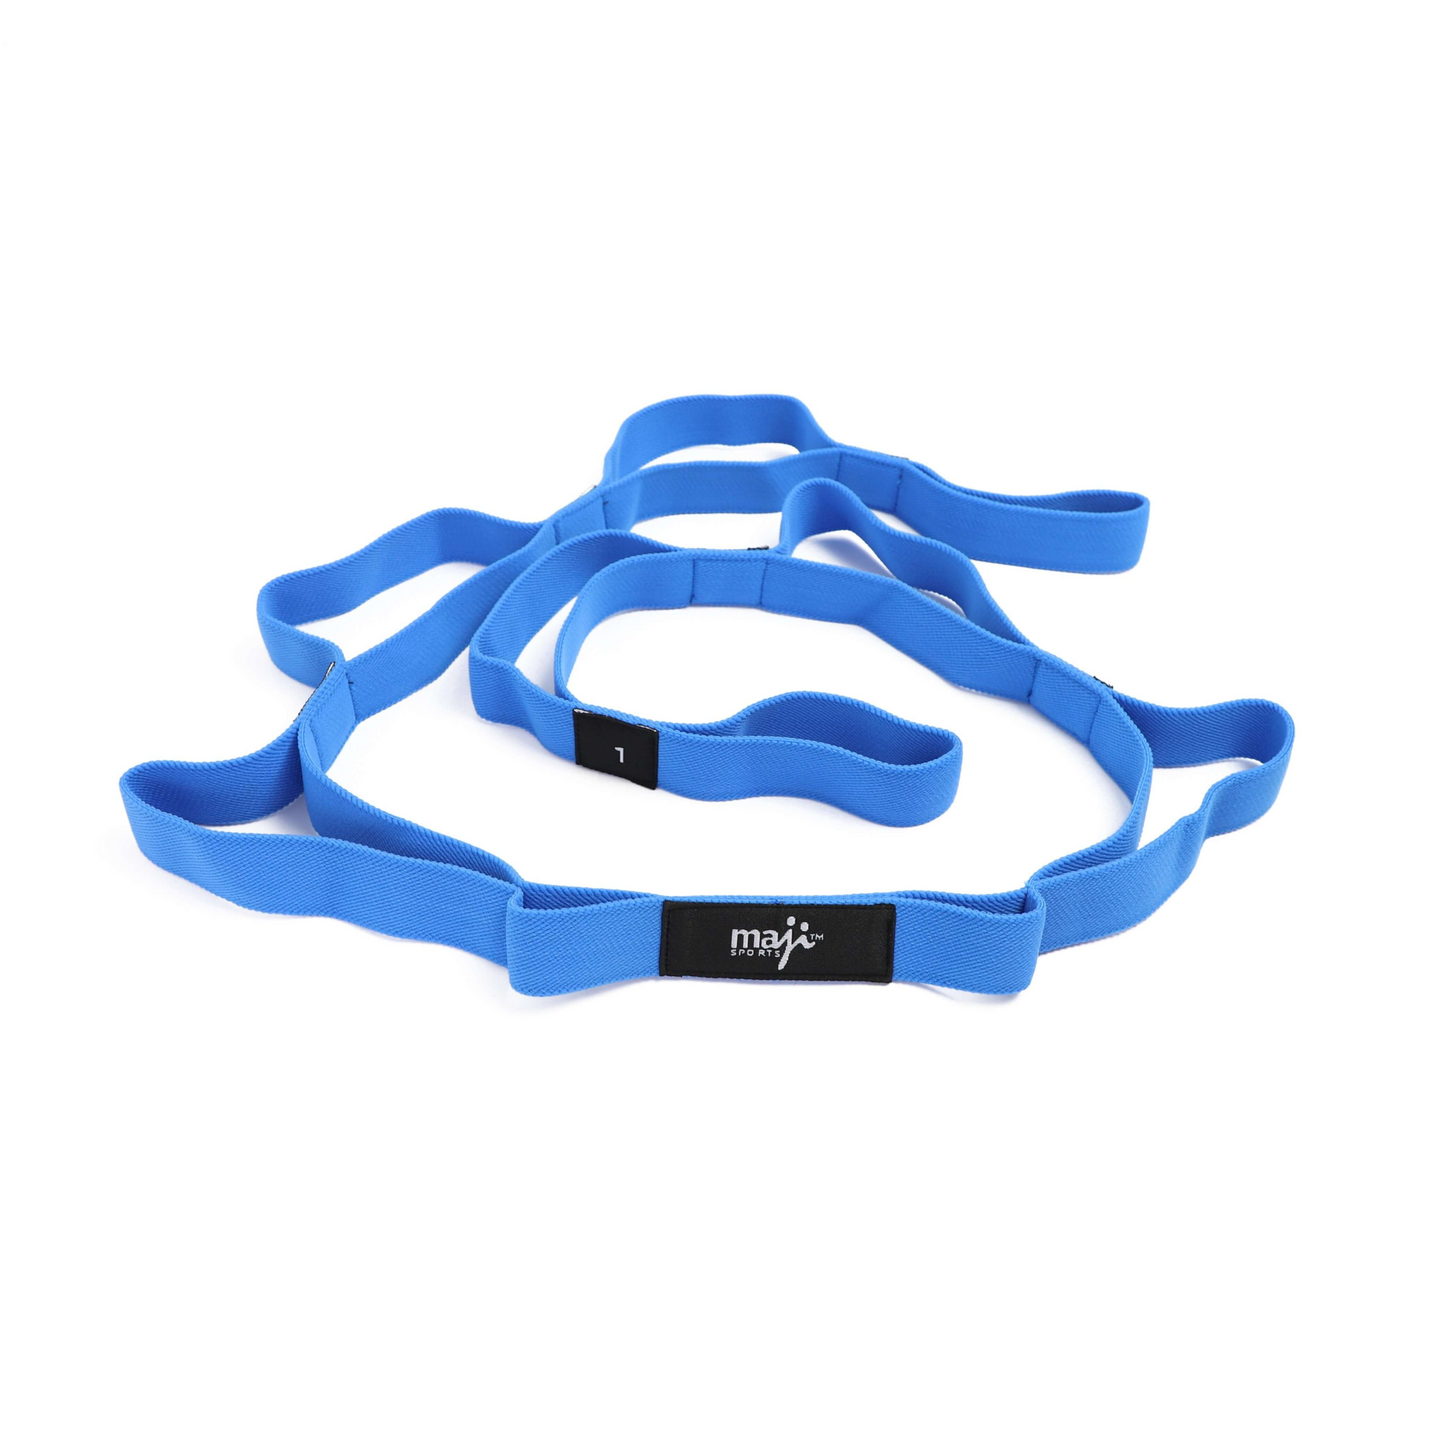 Maji Sports Elastic Yoga Straps With 10 Loops